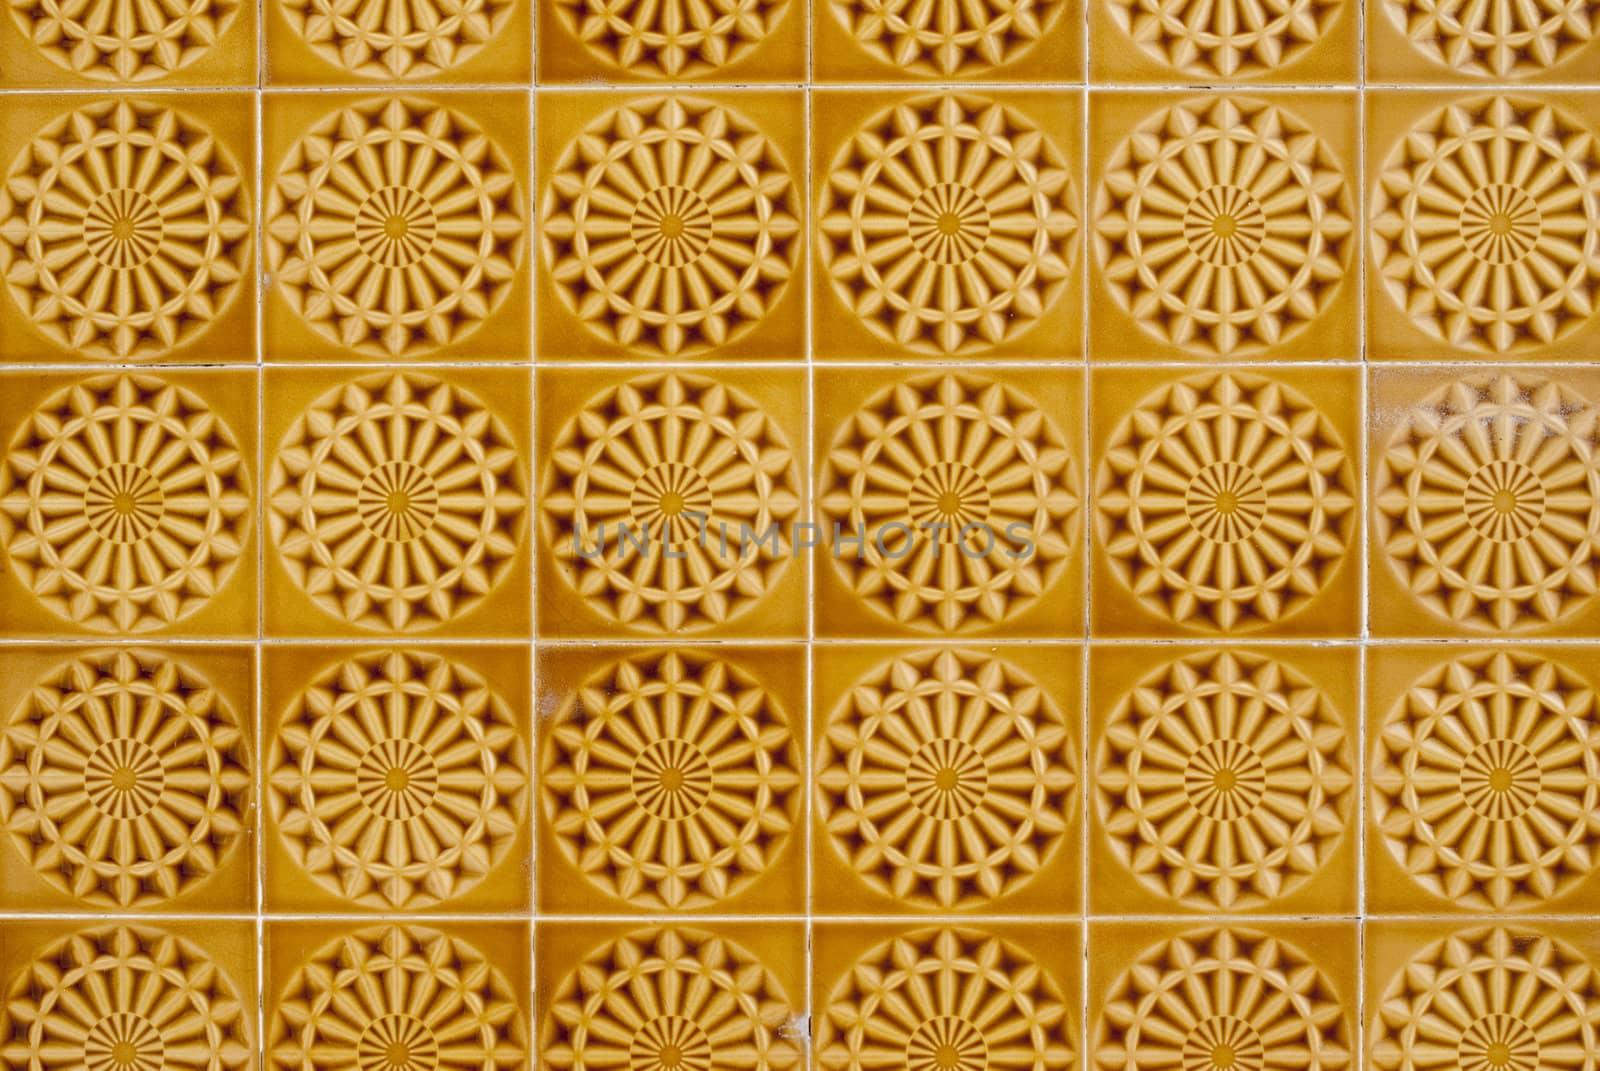 Portuguese glazed tiles 058 by homydesign